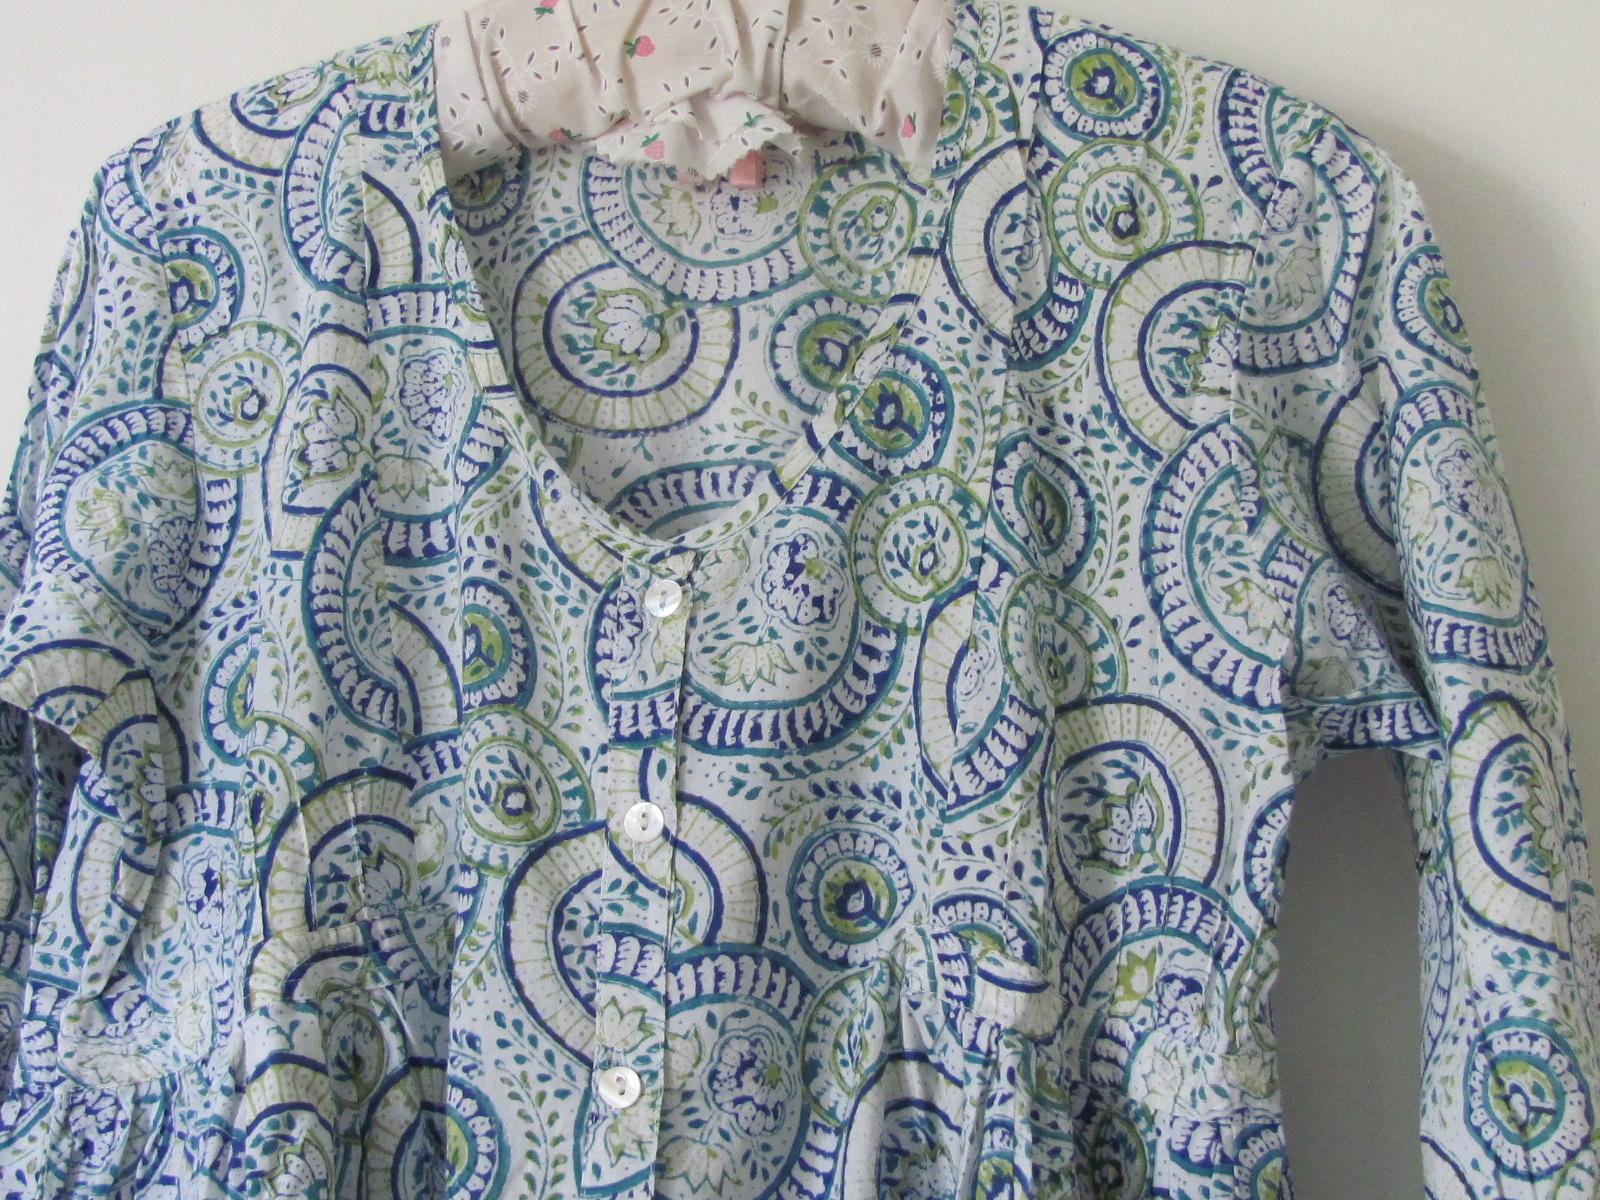 Block print (over) dress full skirt and thin cotton